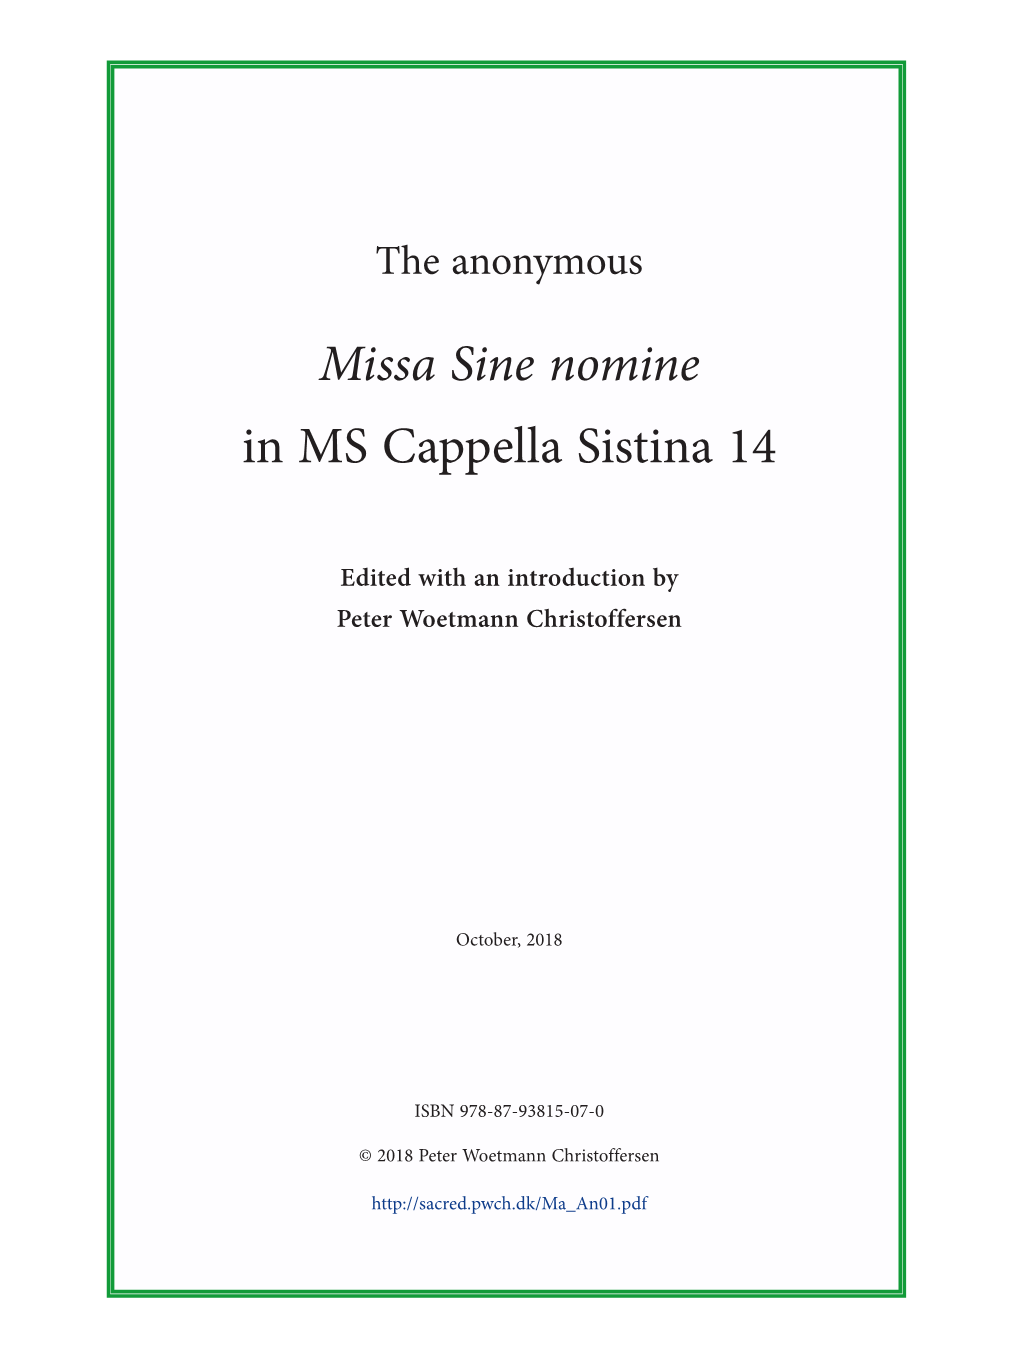 The Anonymous Missa Sine Nomine in MS Cappella Sistina 14